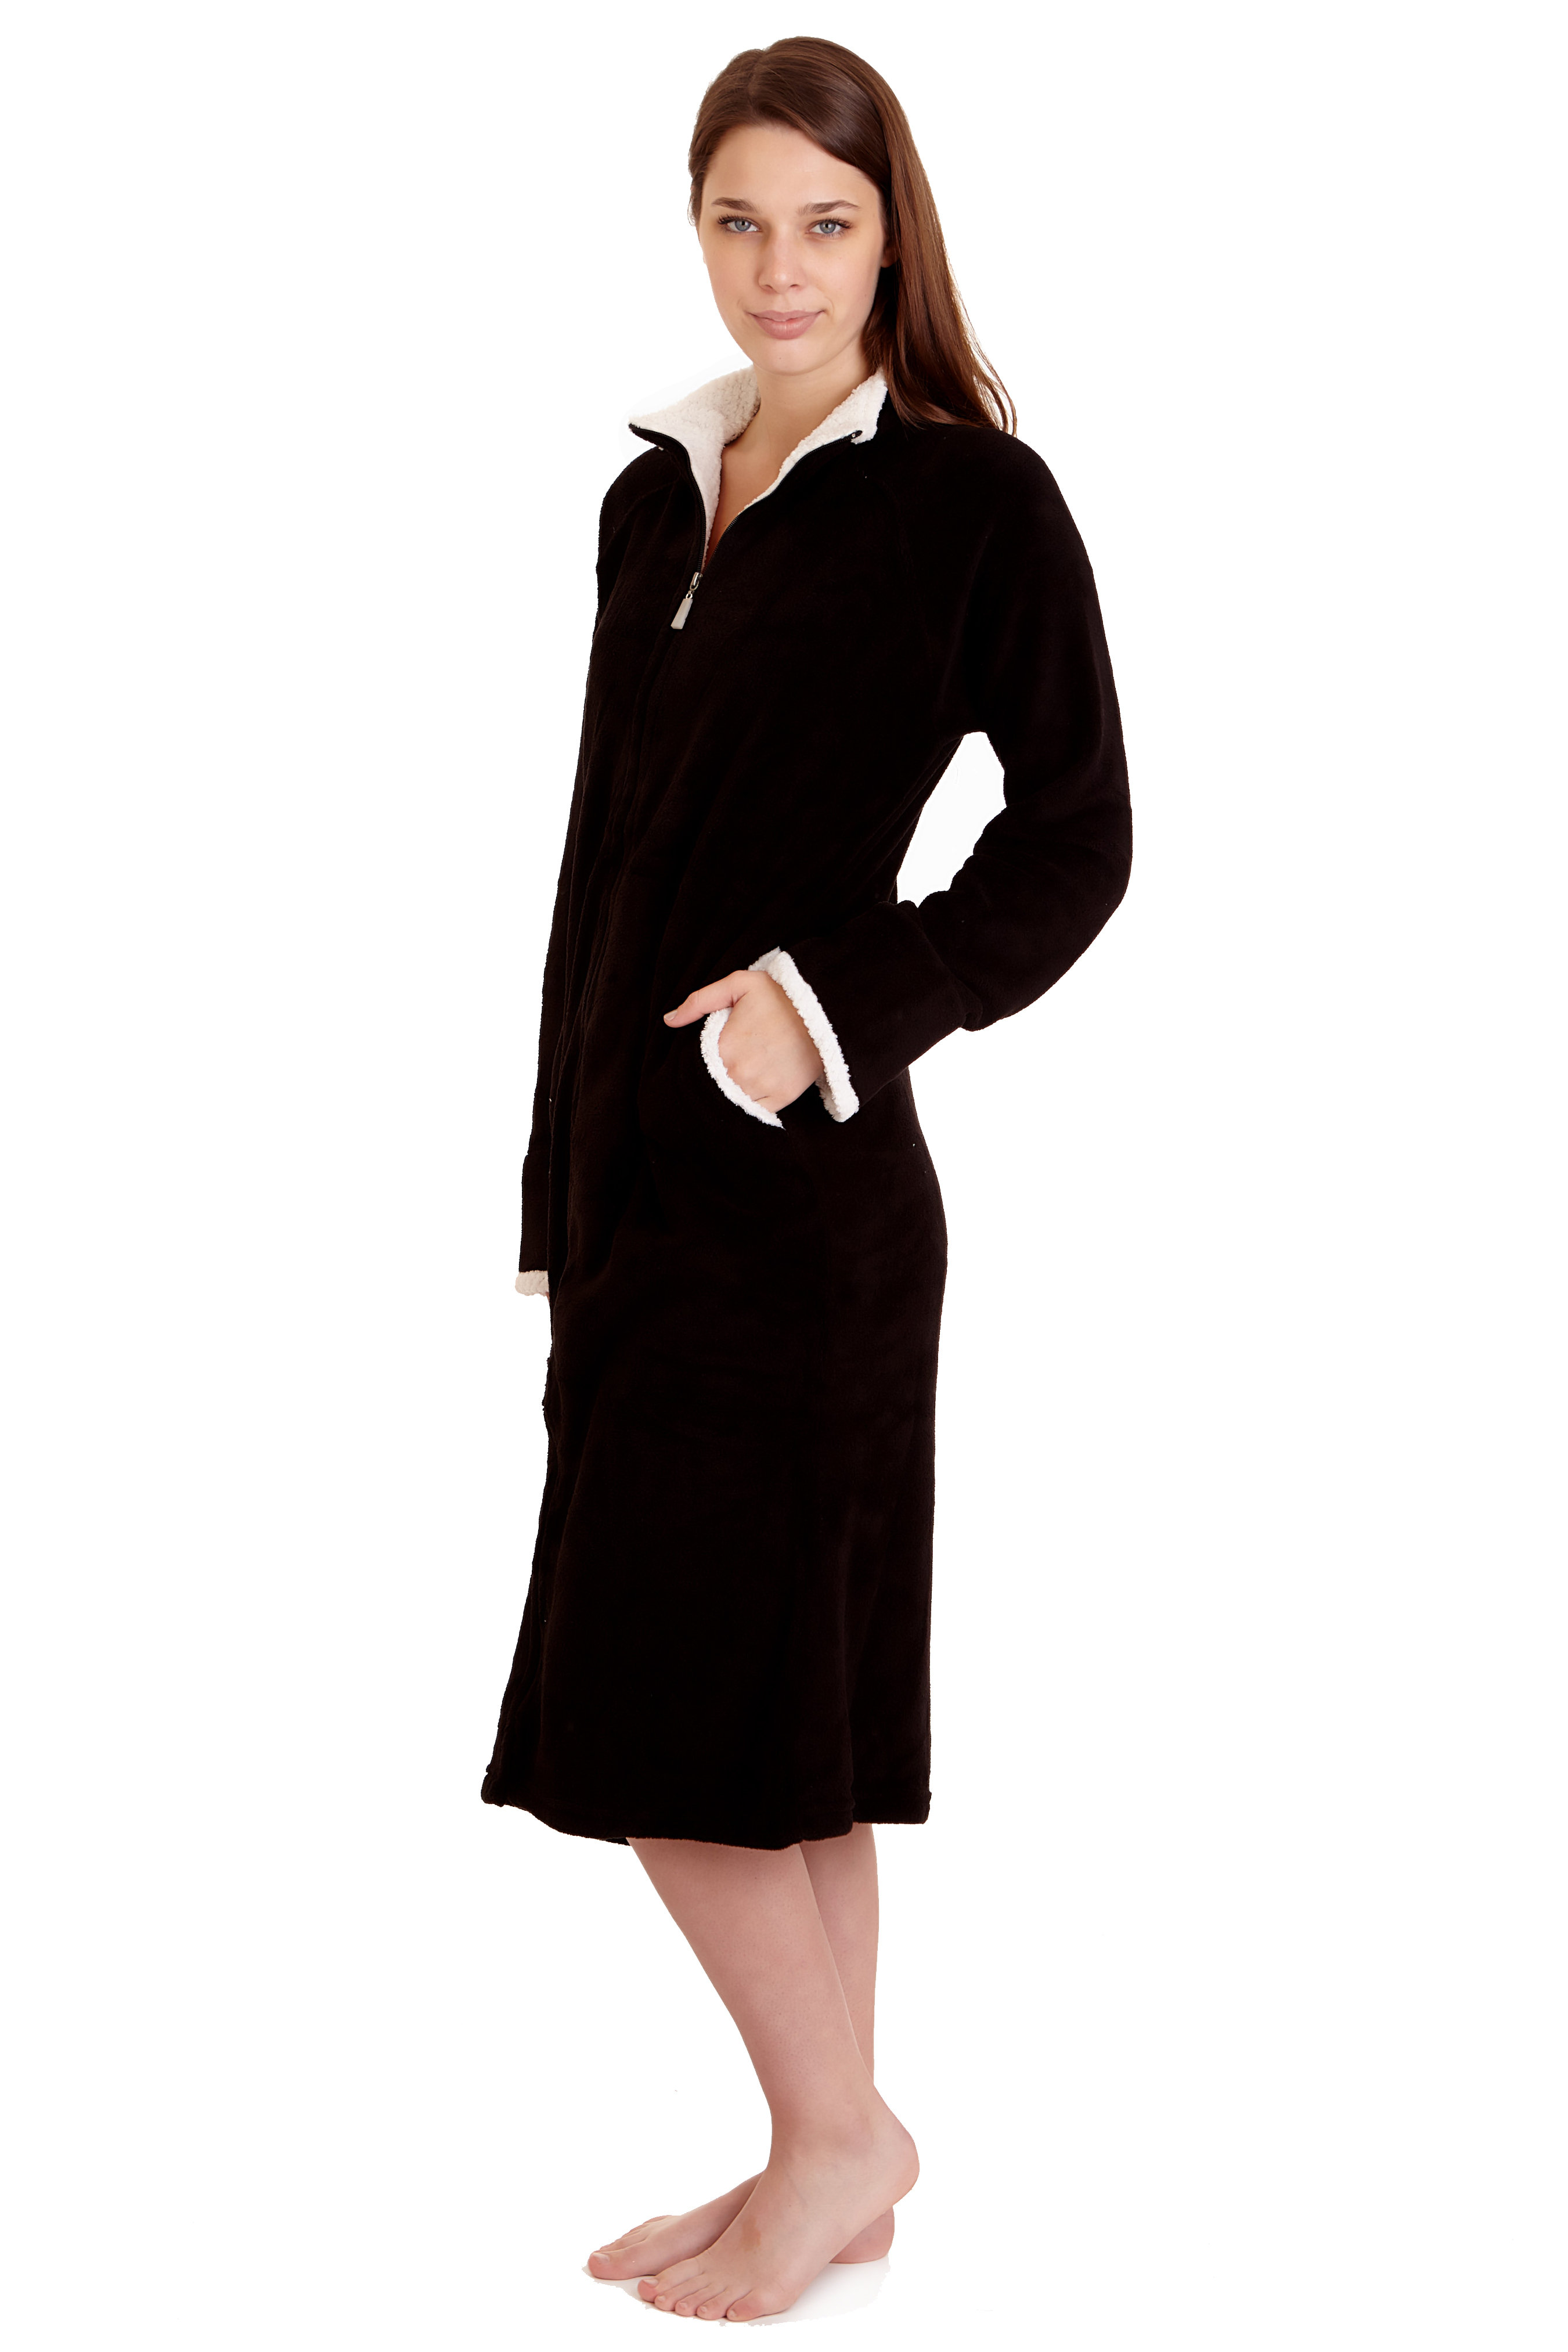 Lati Fashion 4065 Women Spa Robe Long Plush Bath Robe Super Soft Thick Warm